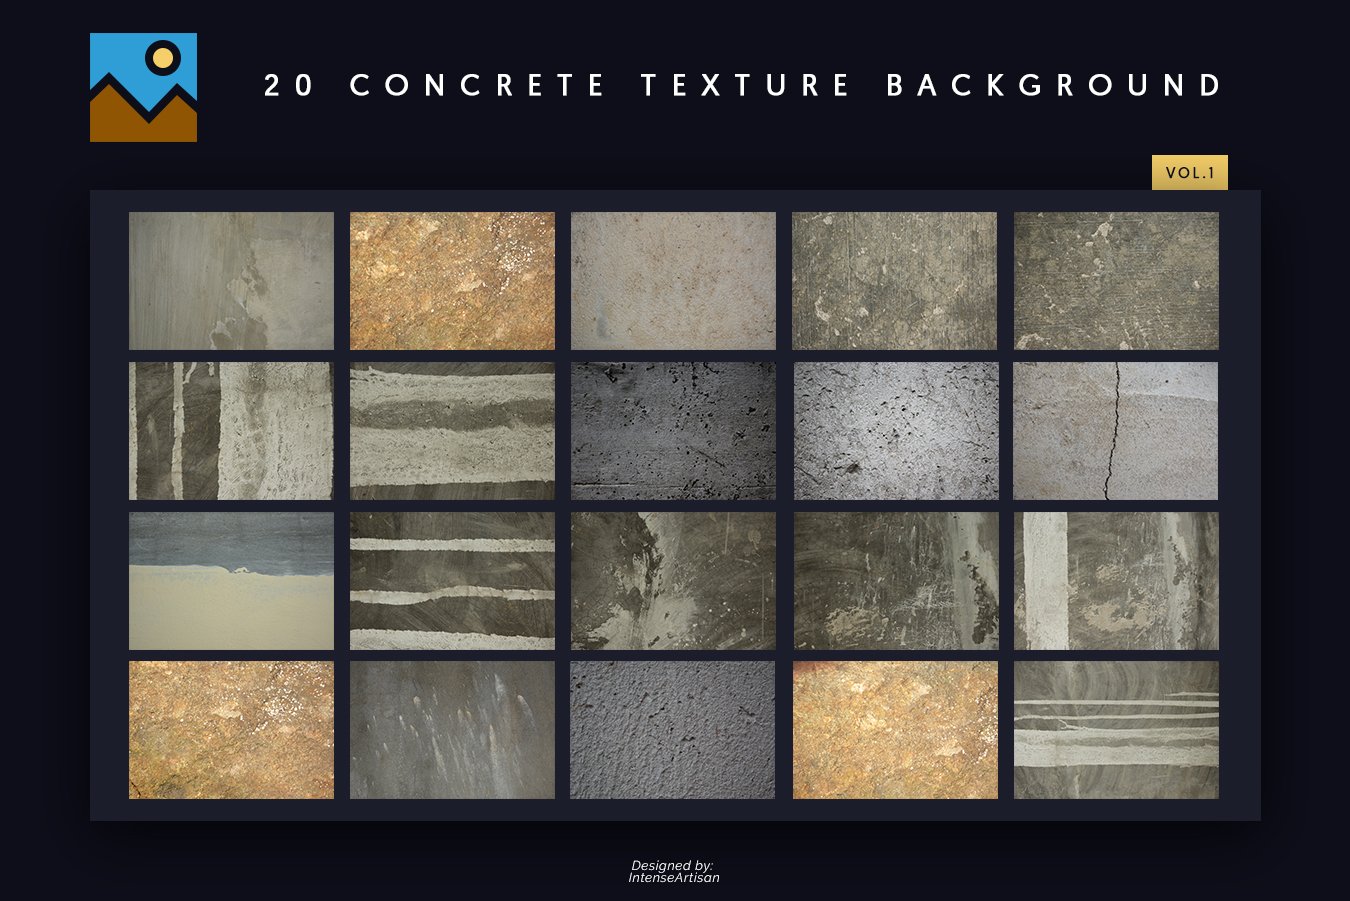 20 Concrete Texture Background cover image.